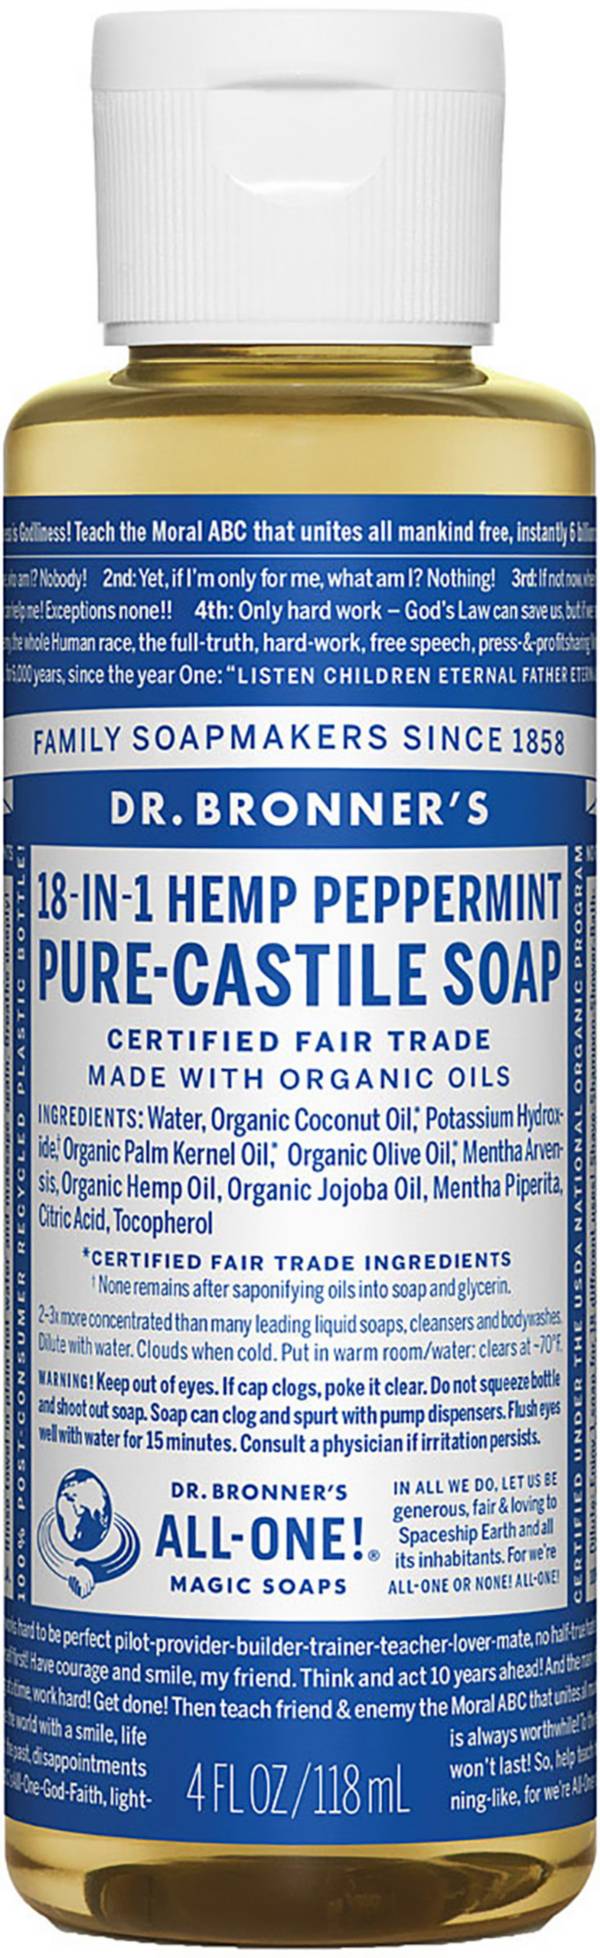 Dr. Bronner's Peppermint 4 oz Pure-Castile Soap product image